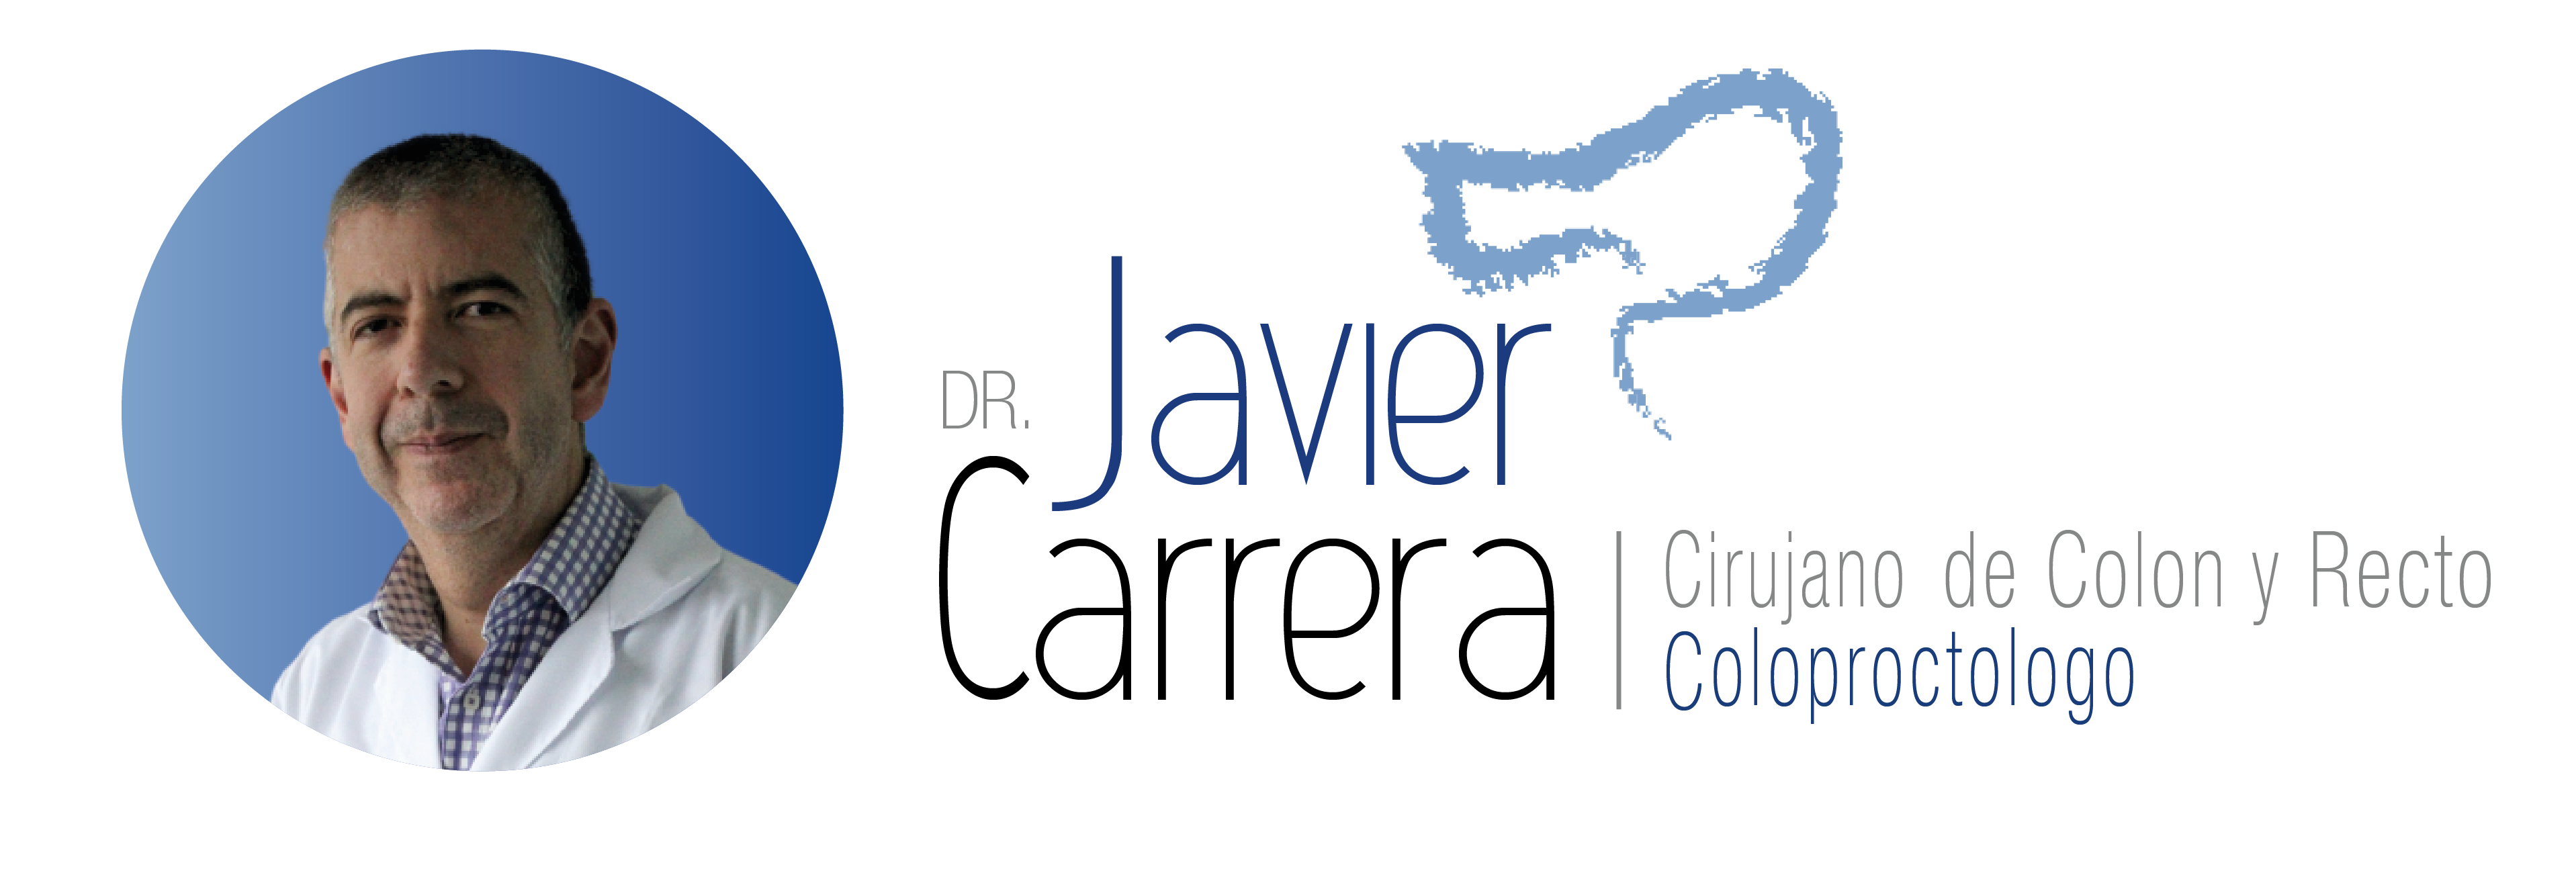 Dr Javier Carrera